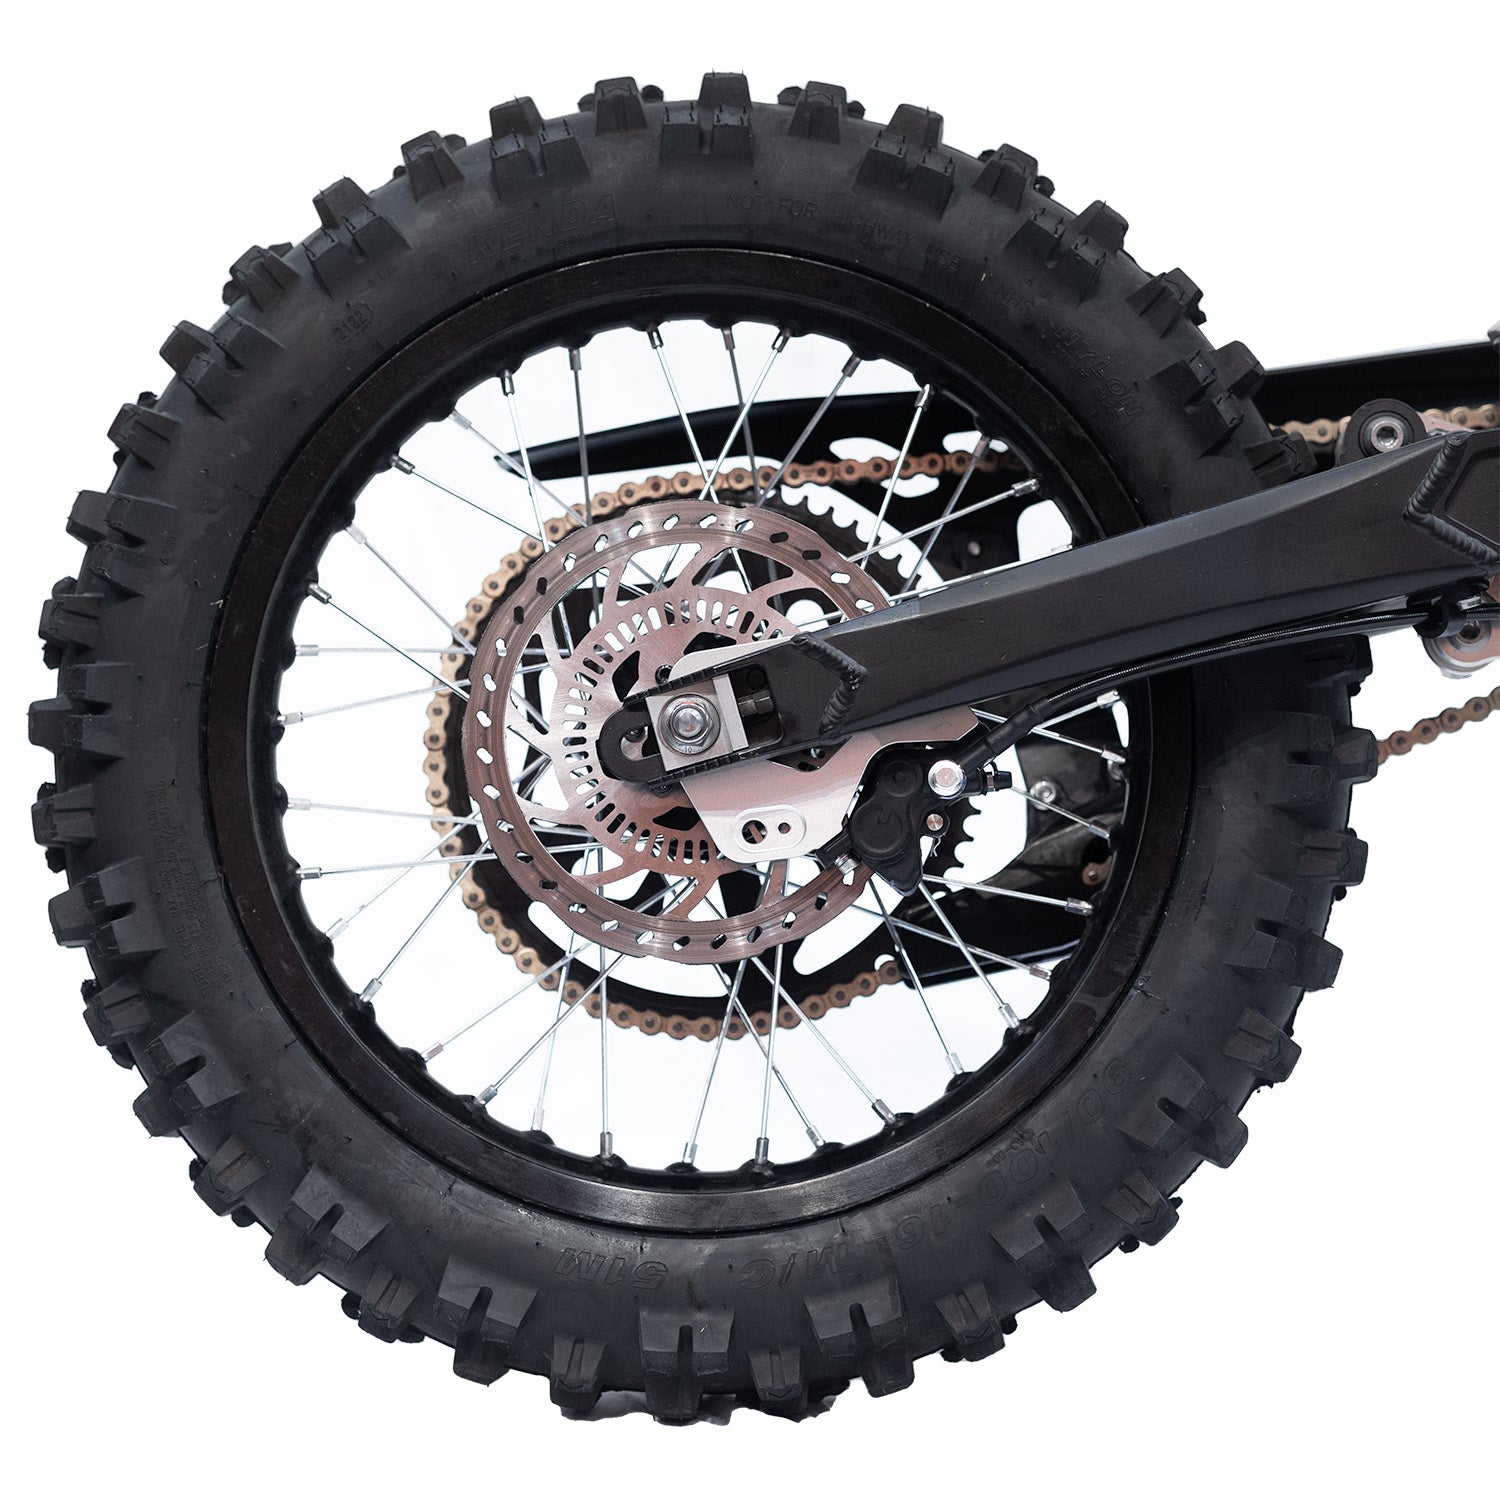 Everest Electric Dirt Bike Rear Wheel Close Up